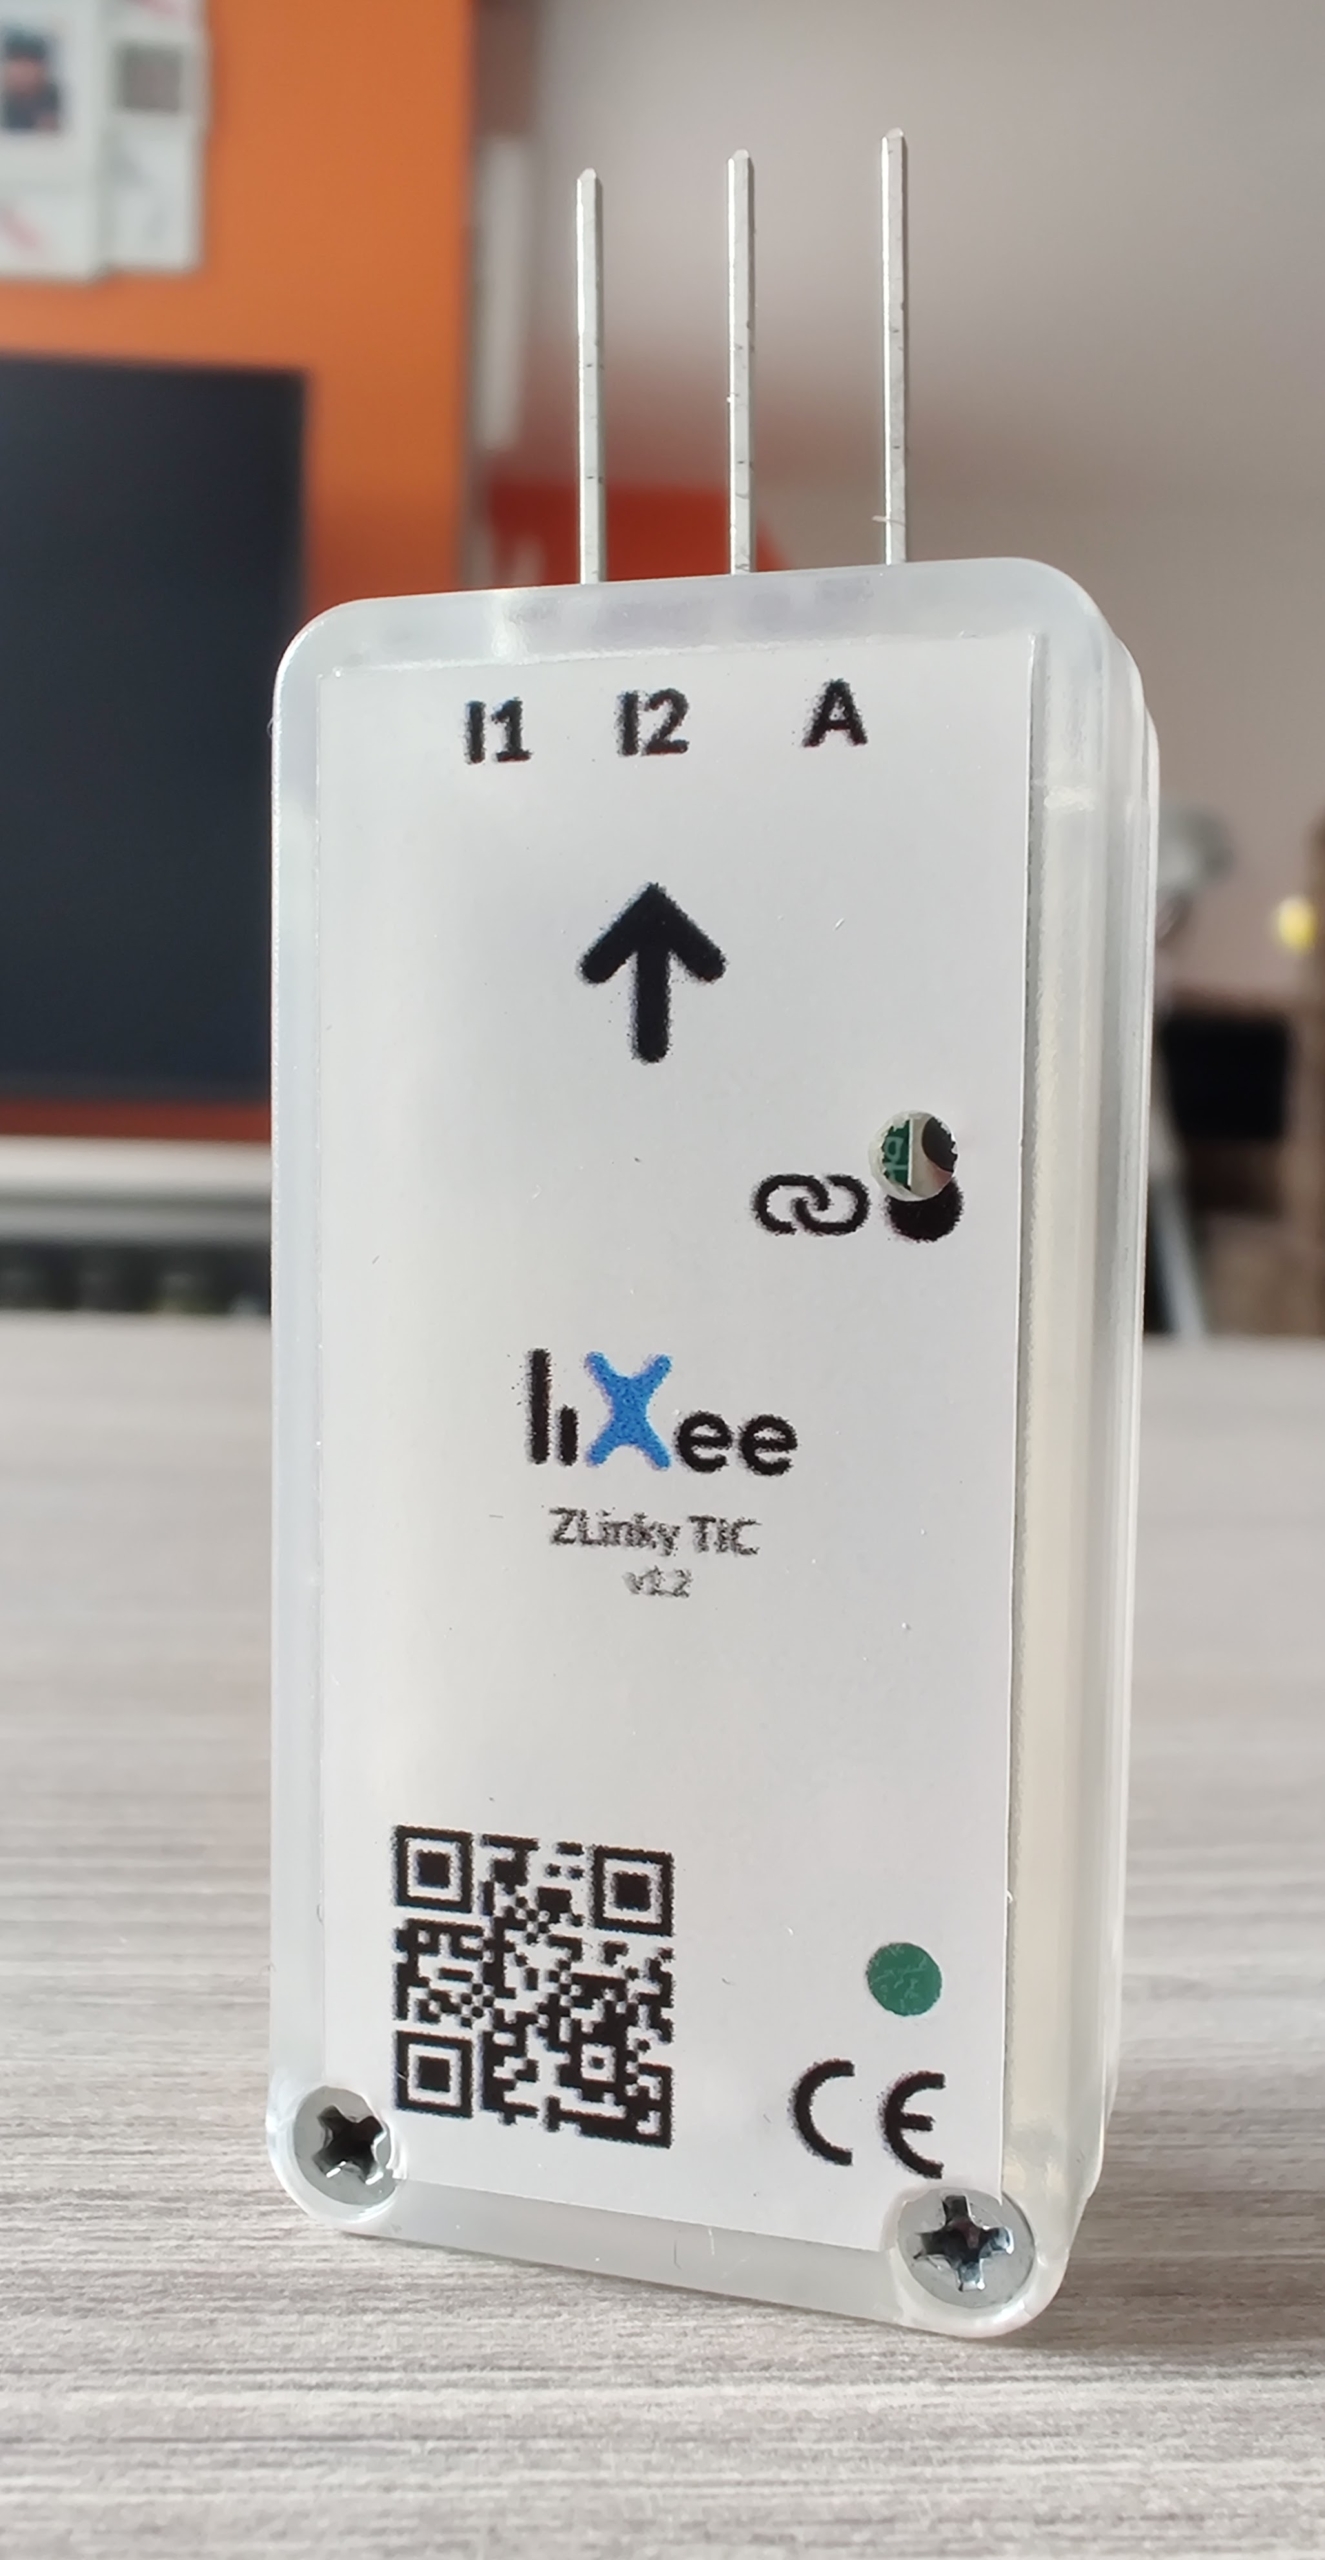 Module téléinformation DIN TIC compatible Linky - Lixee 